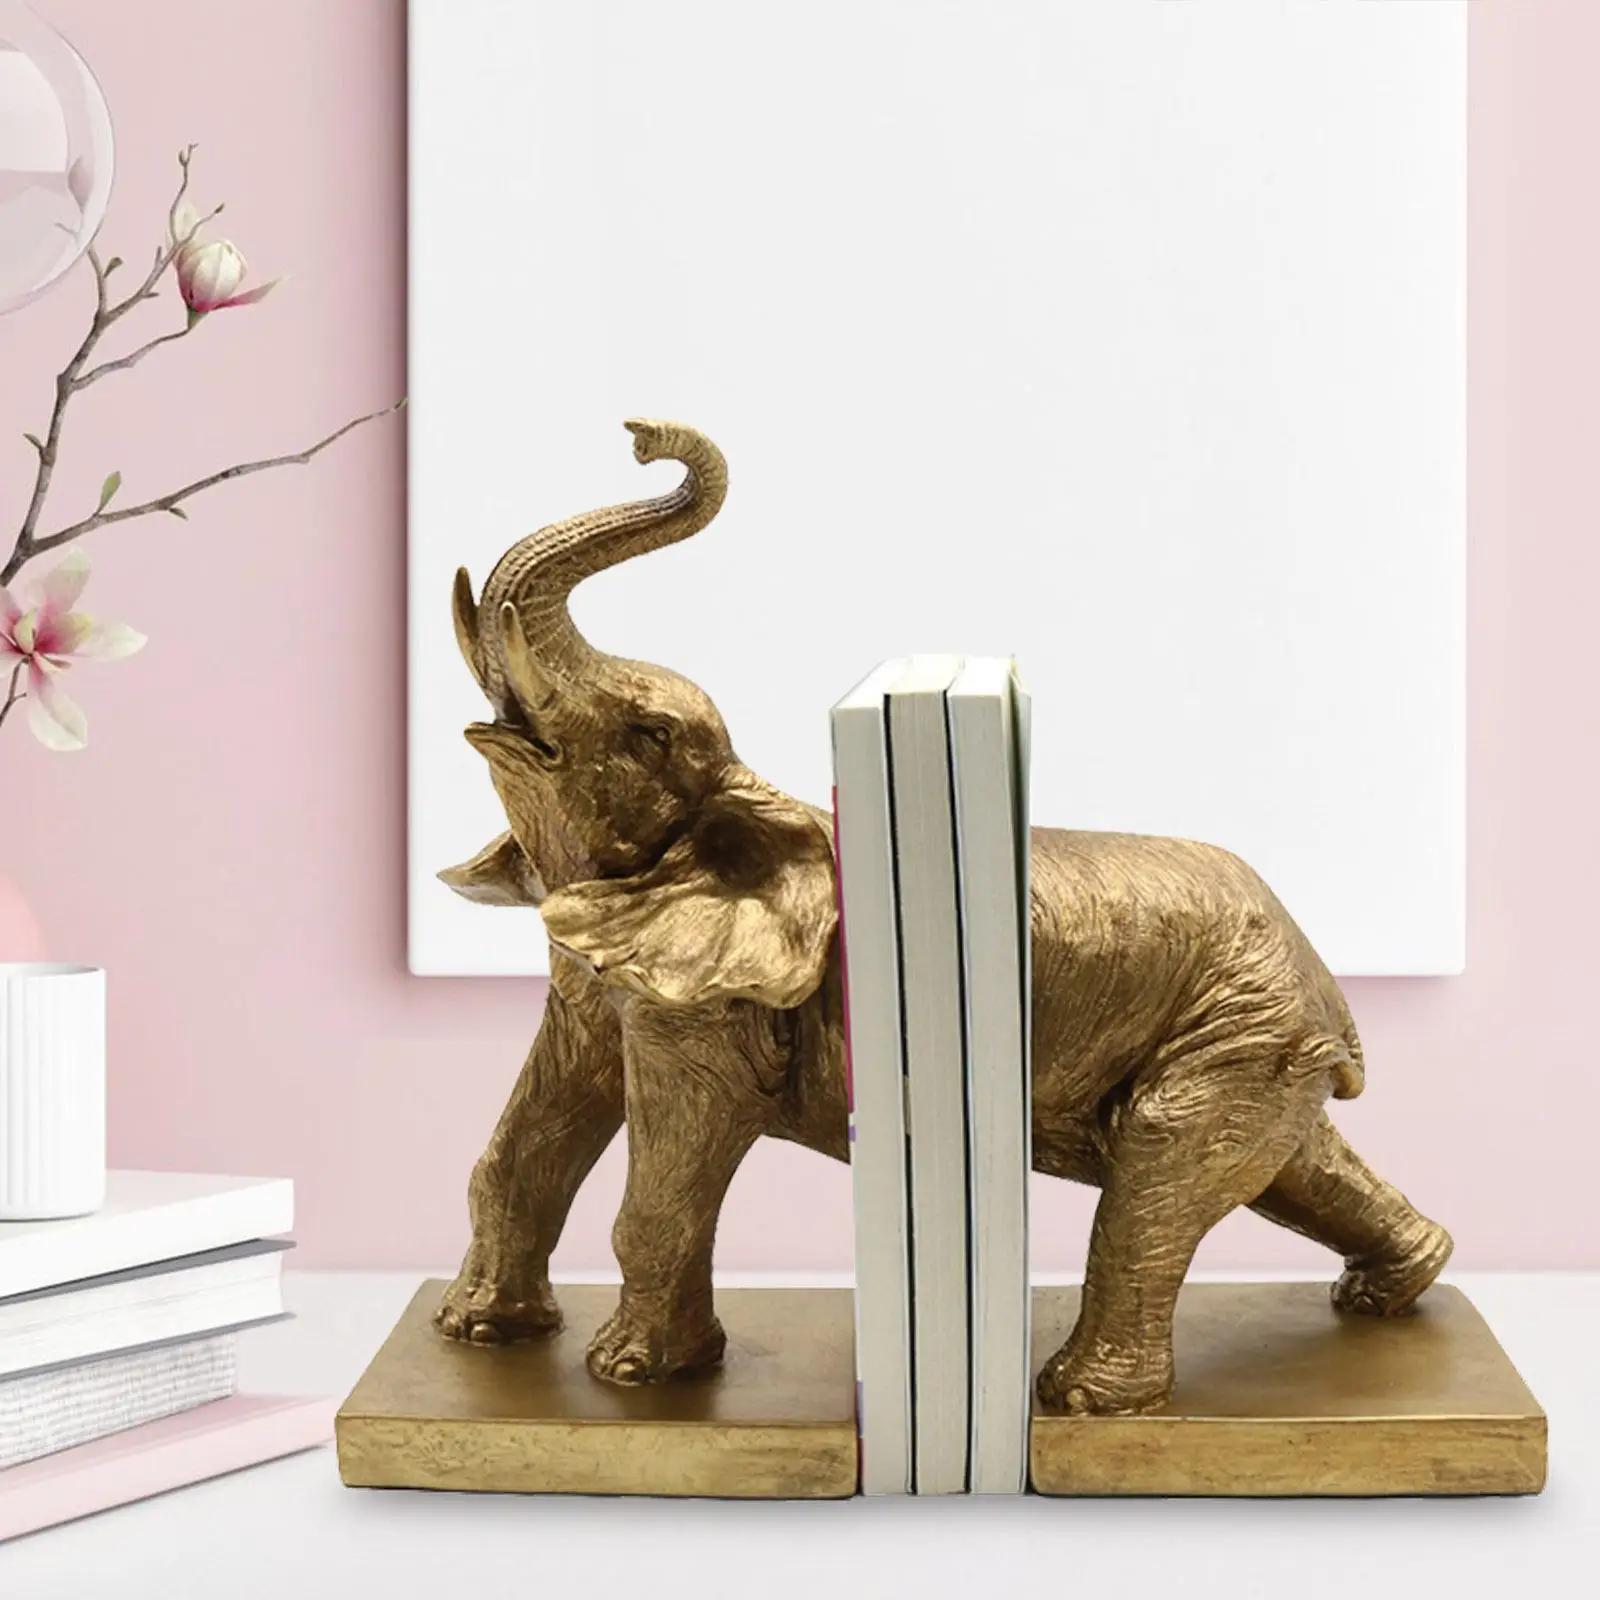 Elephant Figurine Bookfile Creative Freestanding Nordic Art Bookend Book Stand Holder for Bedroom Desk TV Cabinet Bookshelf Home